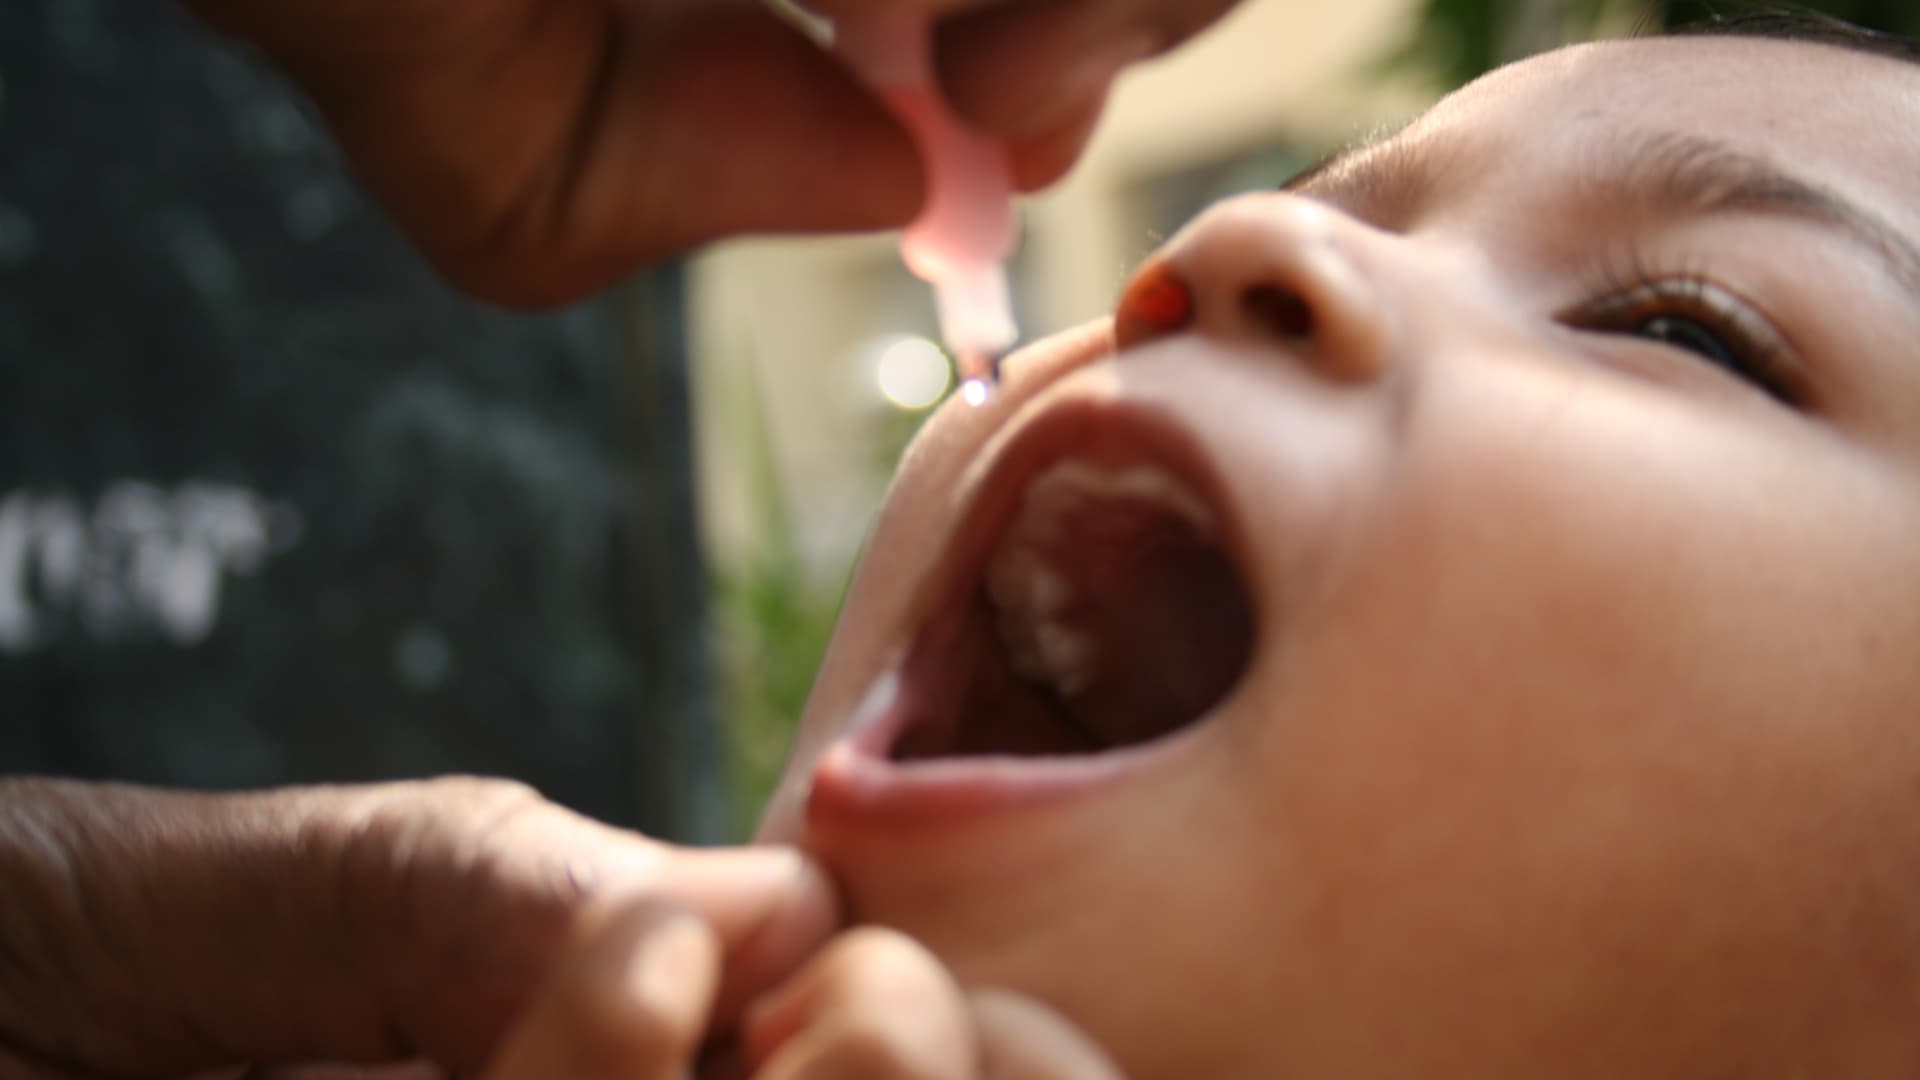 Girl receives anti-polio vaccination drops.